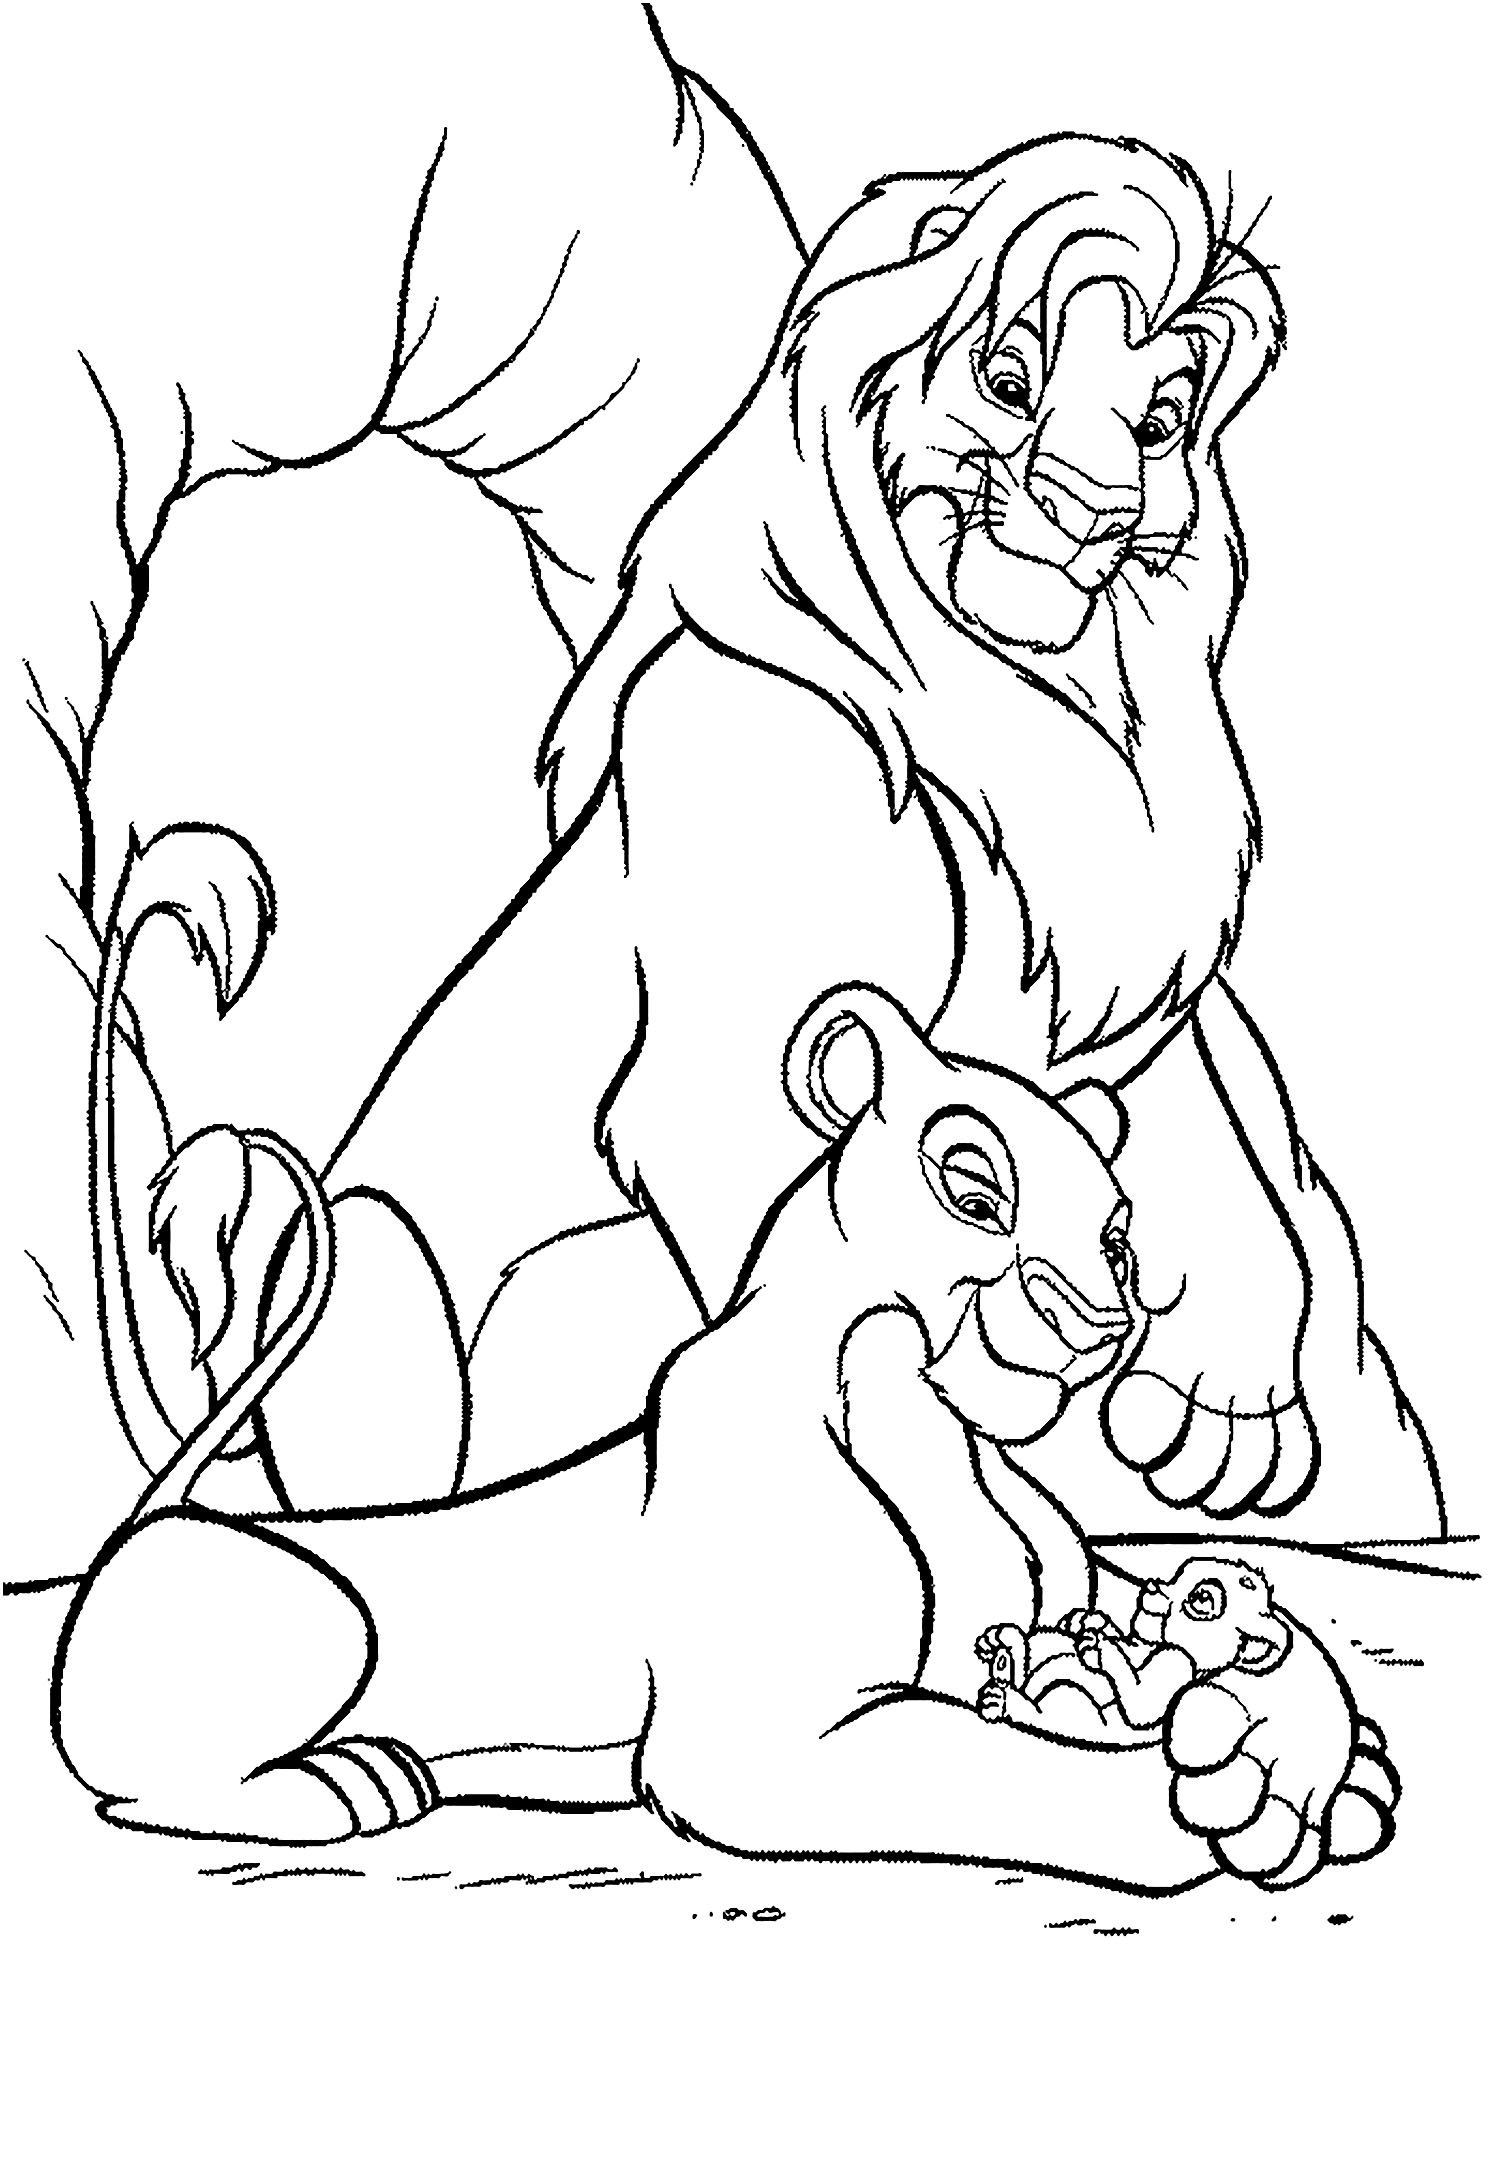 Coloring page with Mufasa, Sarabi and their son Simba